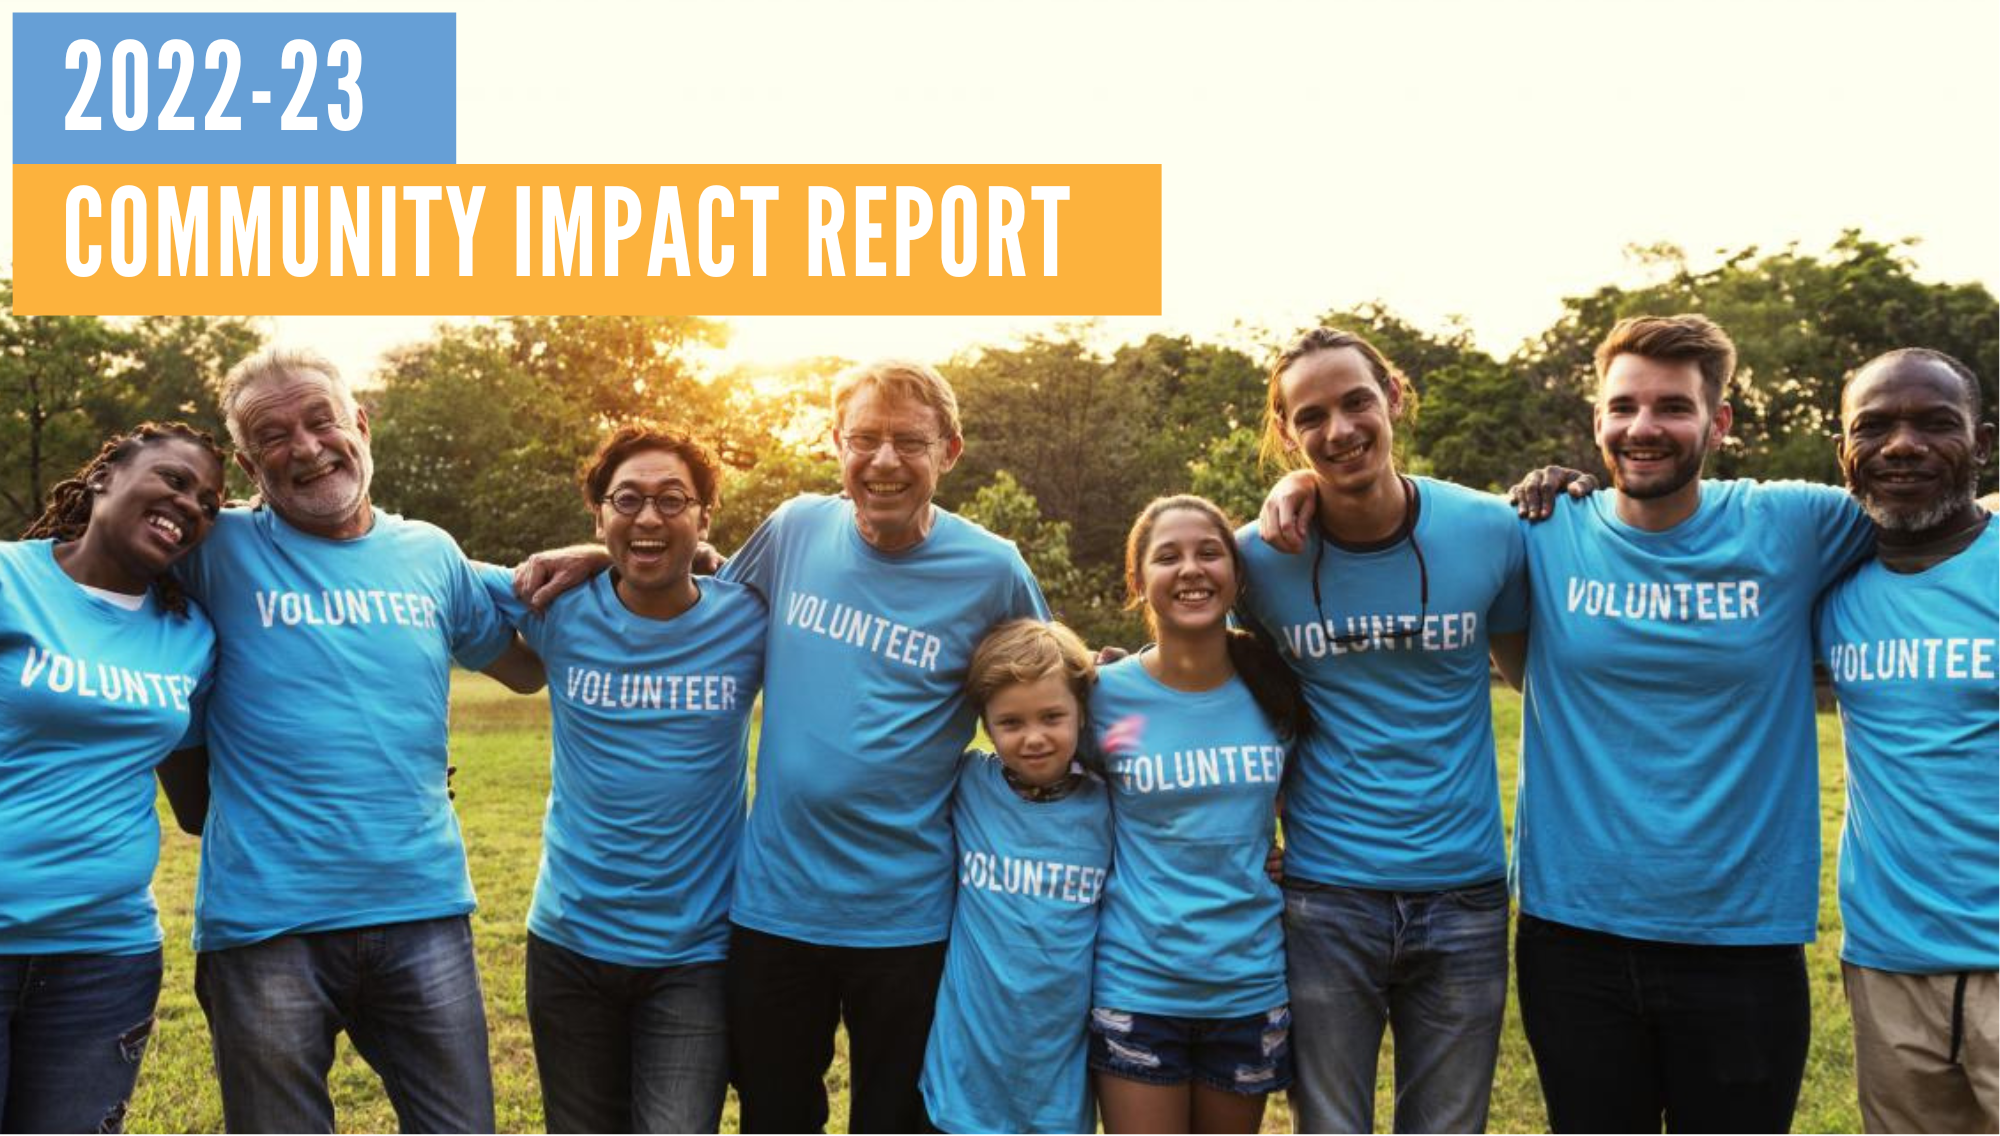 Community Impact Report Image